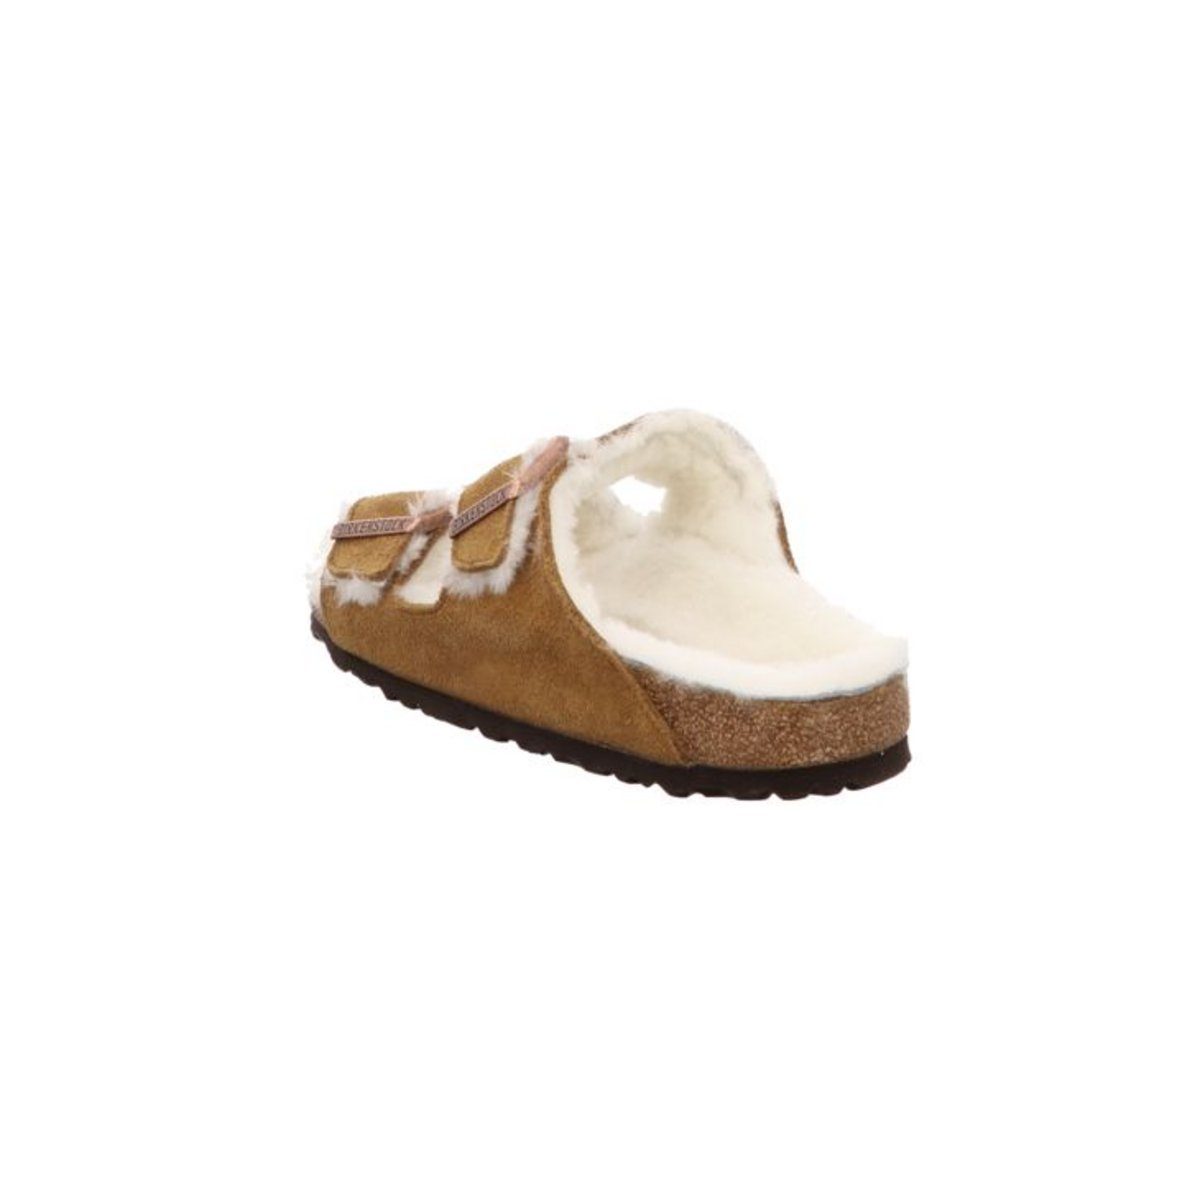 (1-tlg) Sandalette Birkenstock braun